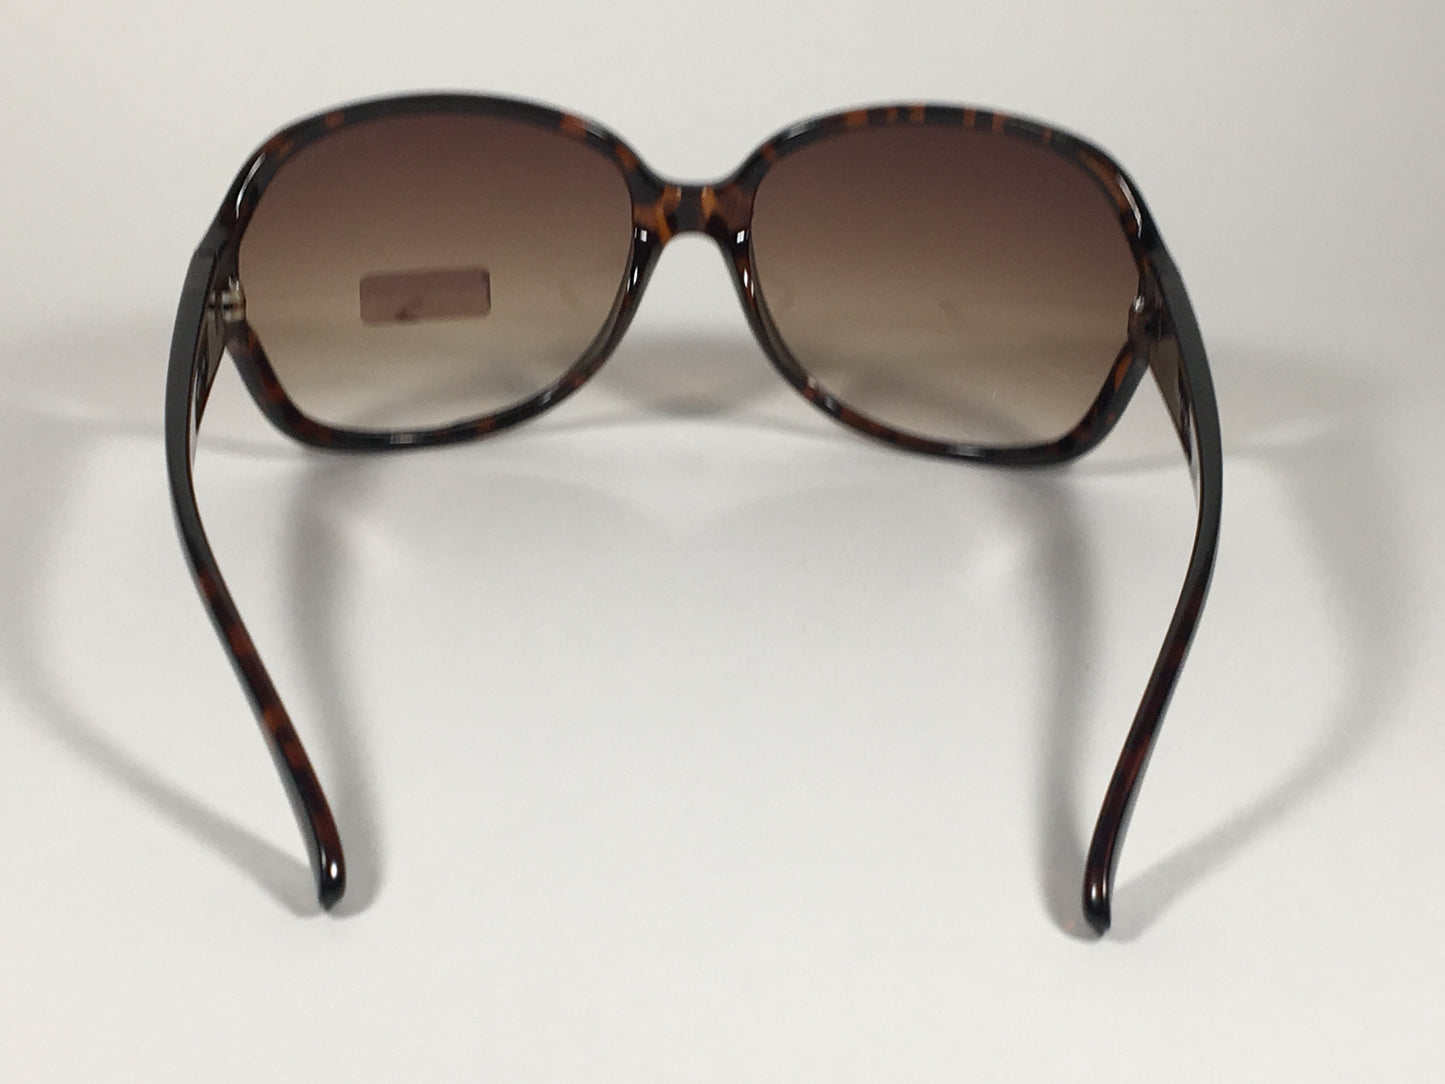 Tommy Hilfiger Trista Vented Oversize Sunglasses Brown Tortoise Frame Brown Gradient Lens TRISTA WP OL33 - Sunglasses